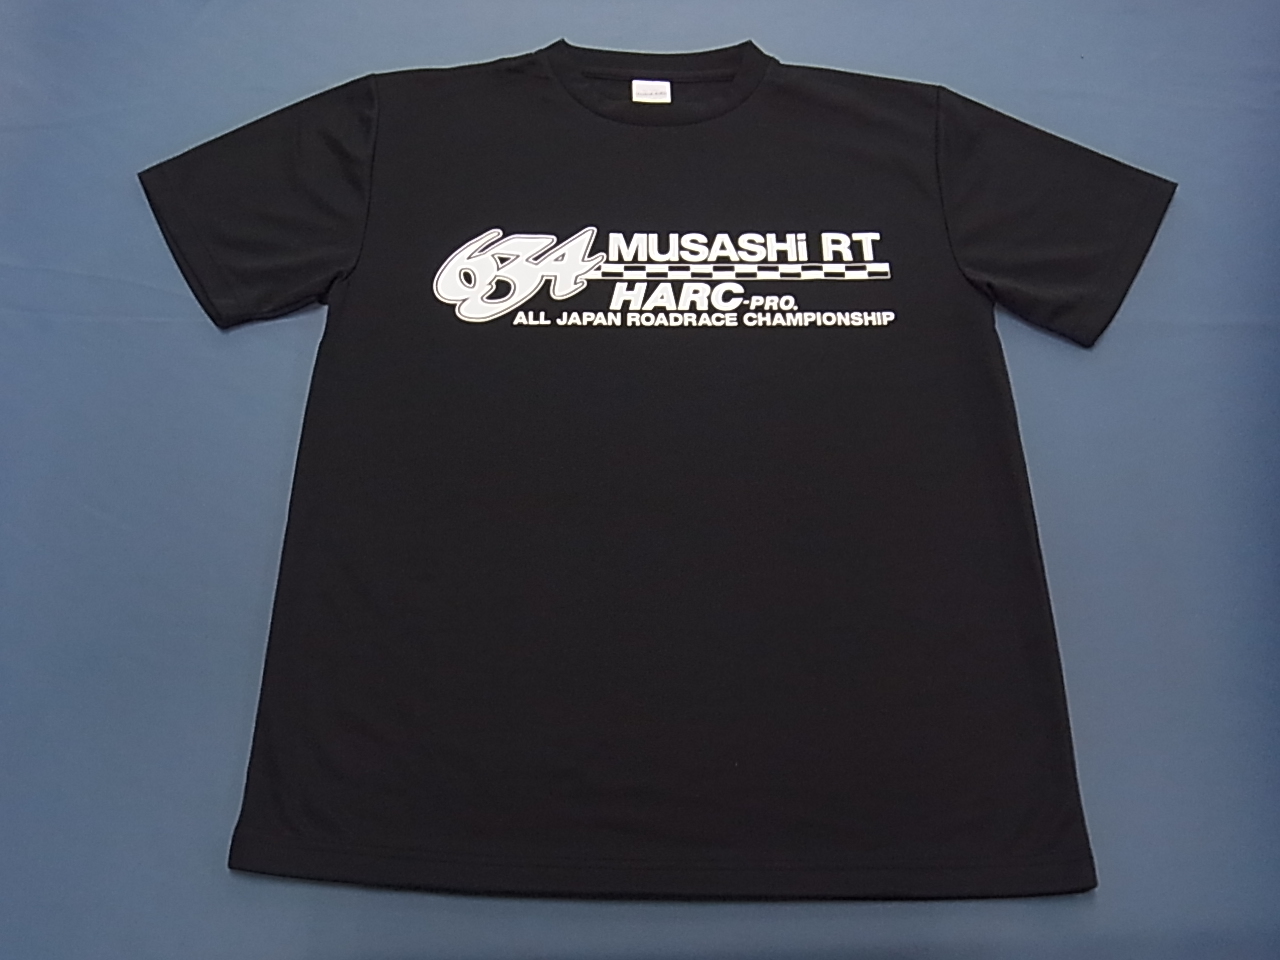 MuSASHi RT HARC-PRO. t shirt black